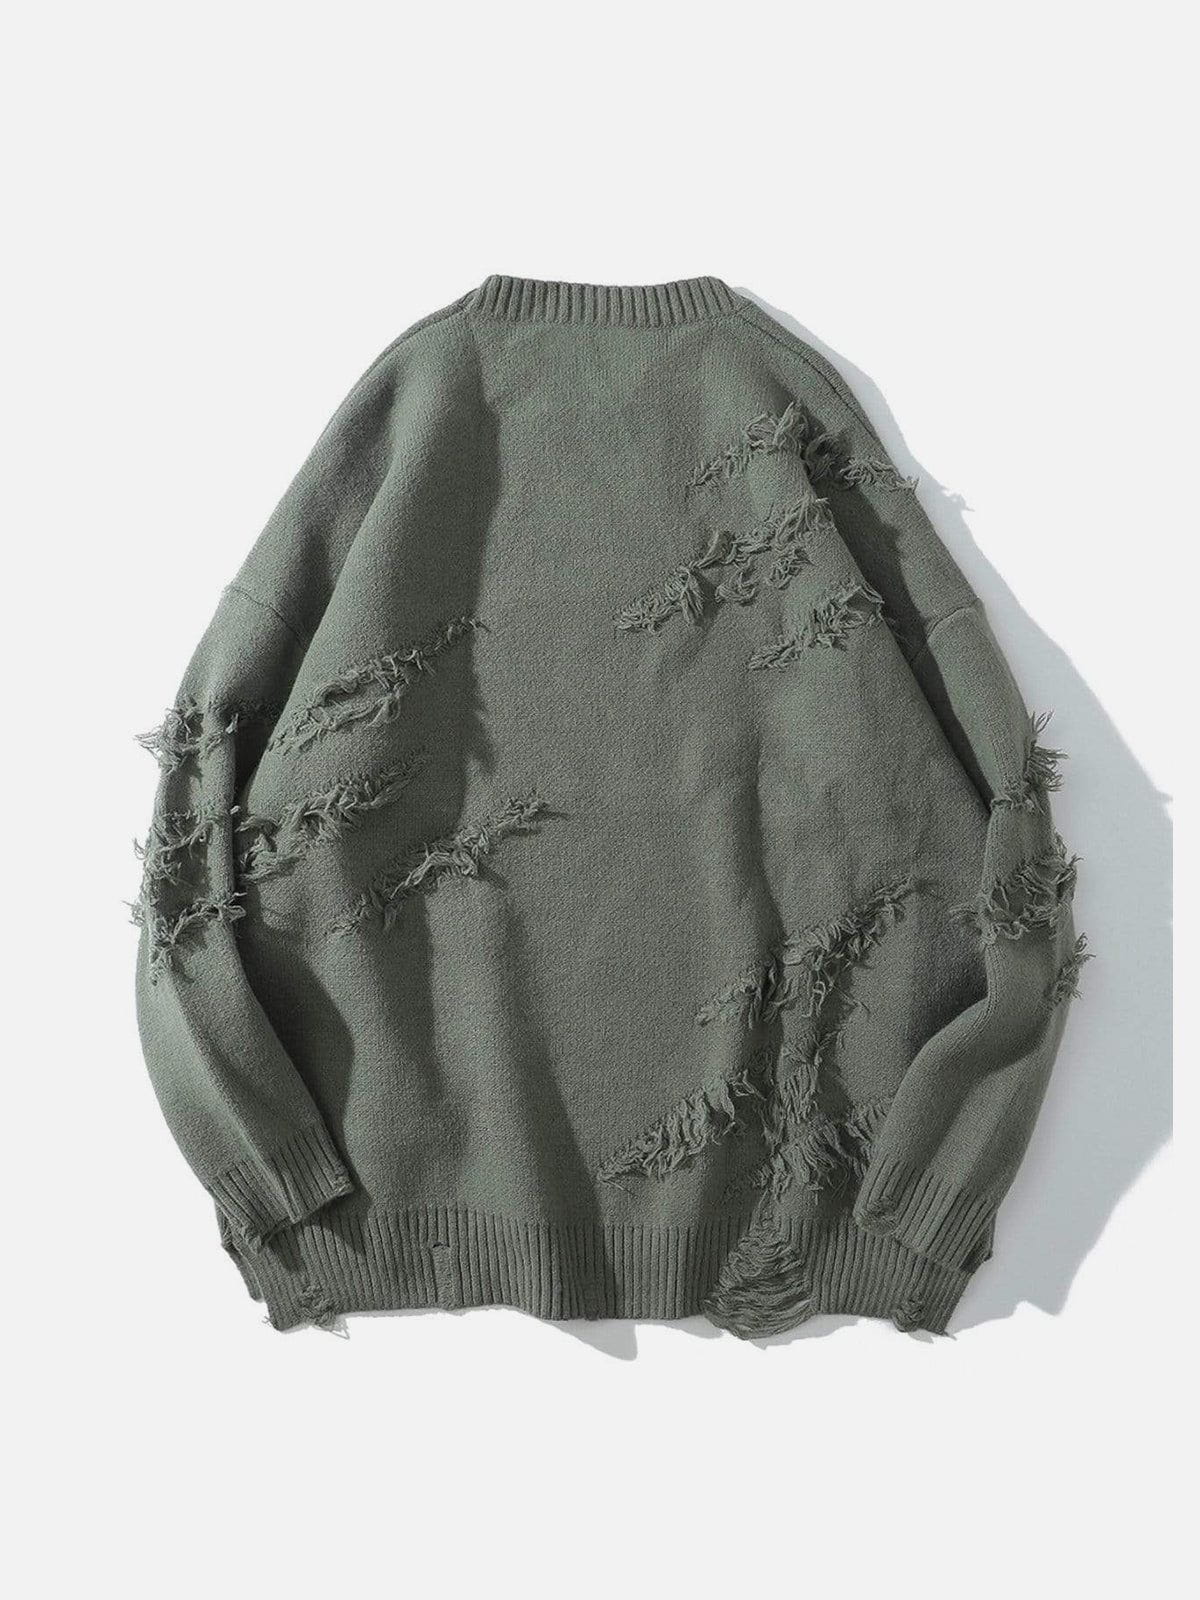 Rwoiut Fringed Design Sweater